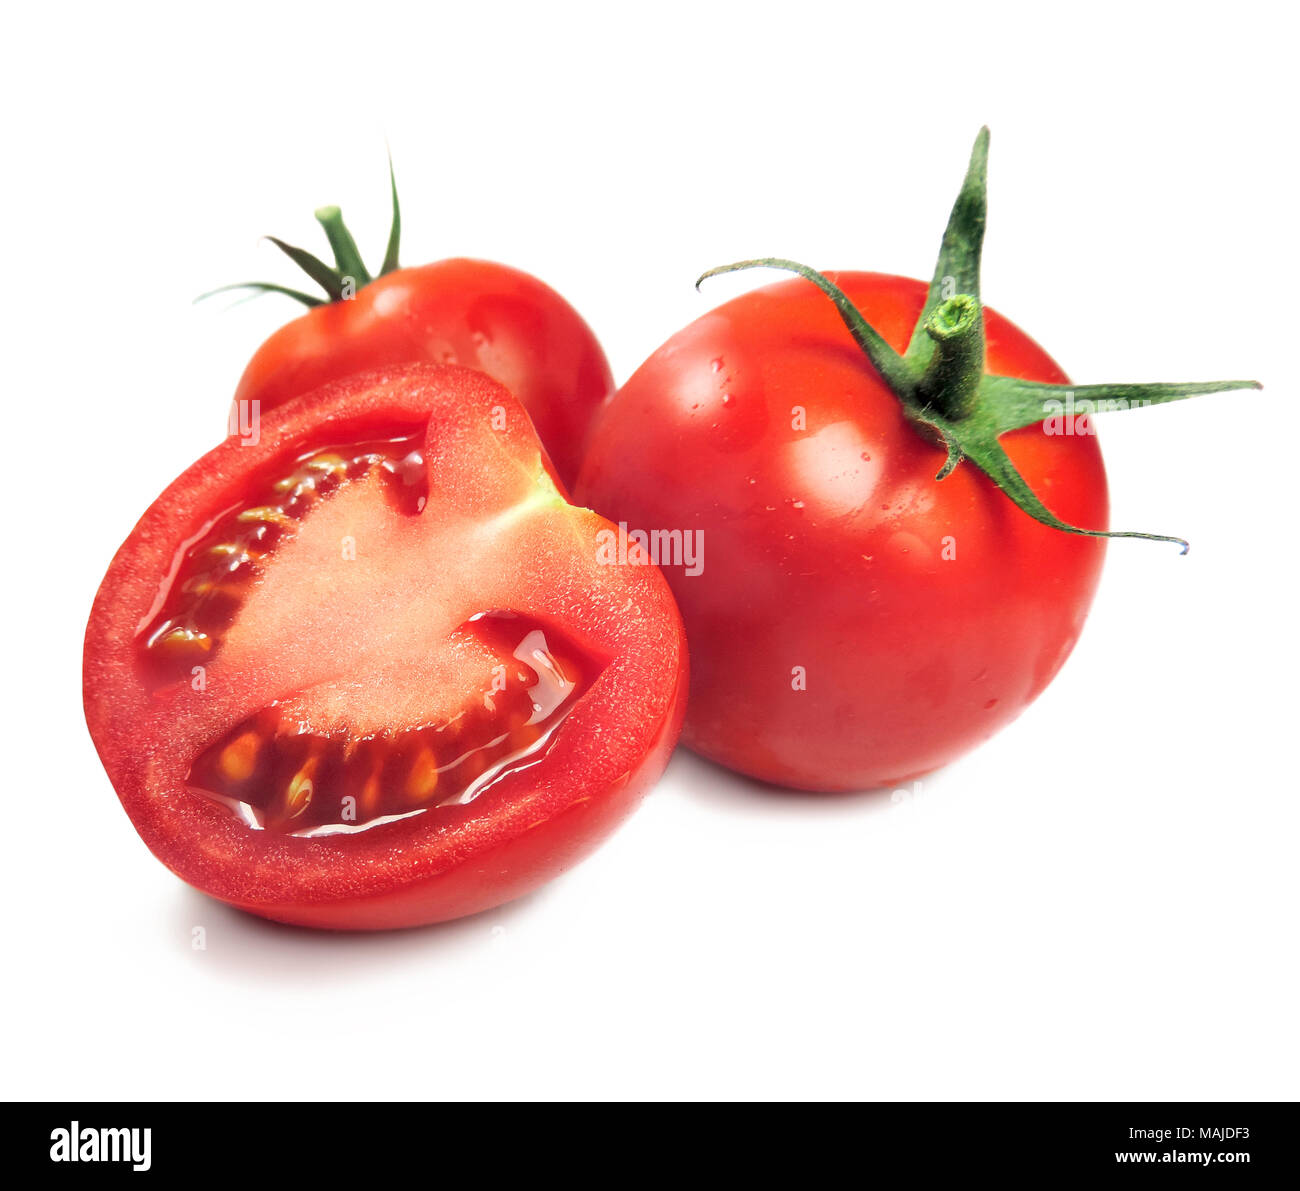 Tomates maduros o tomates cherry, aislado sobre fondo blanco. Rodaja de tomate fresco y zapata tomates en blanco. Ingredientes de cocina. Foto de stock